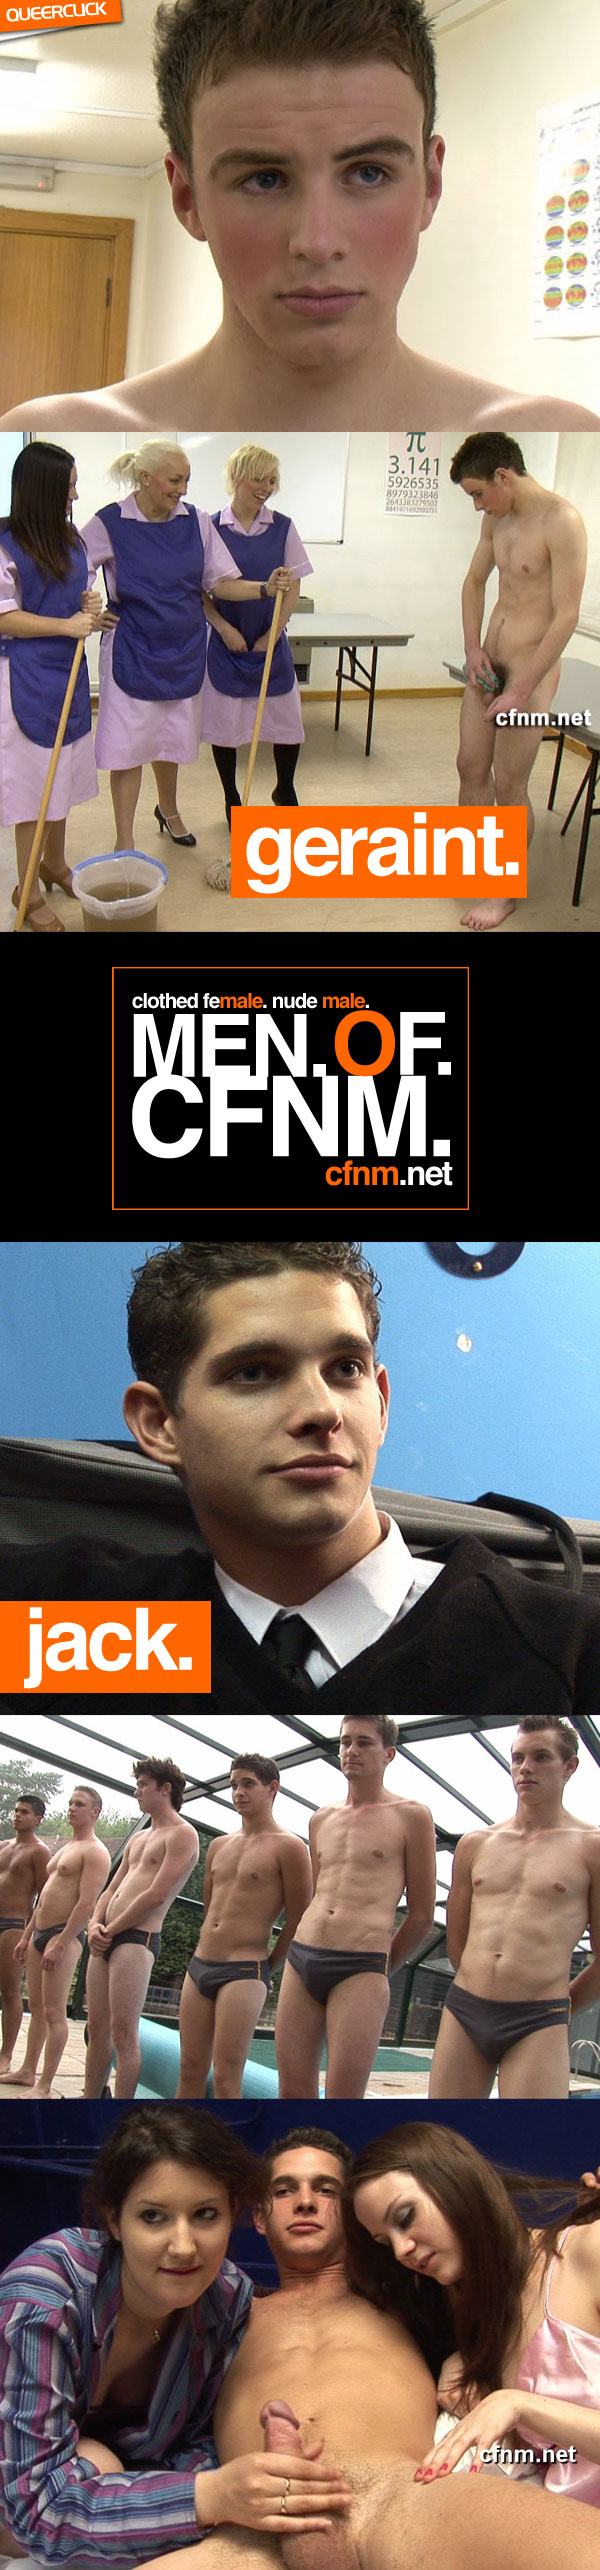 CFNM.net - Men of CFNM